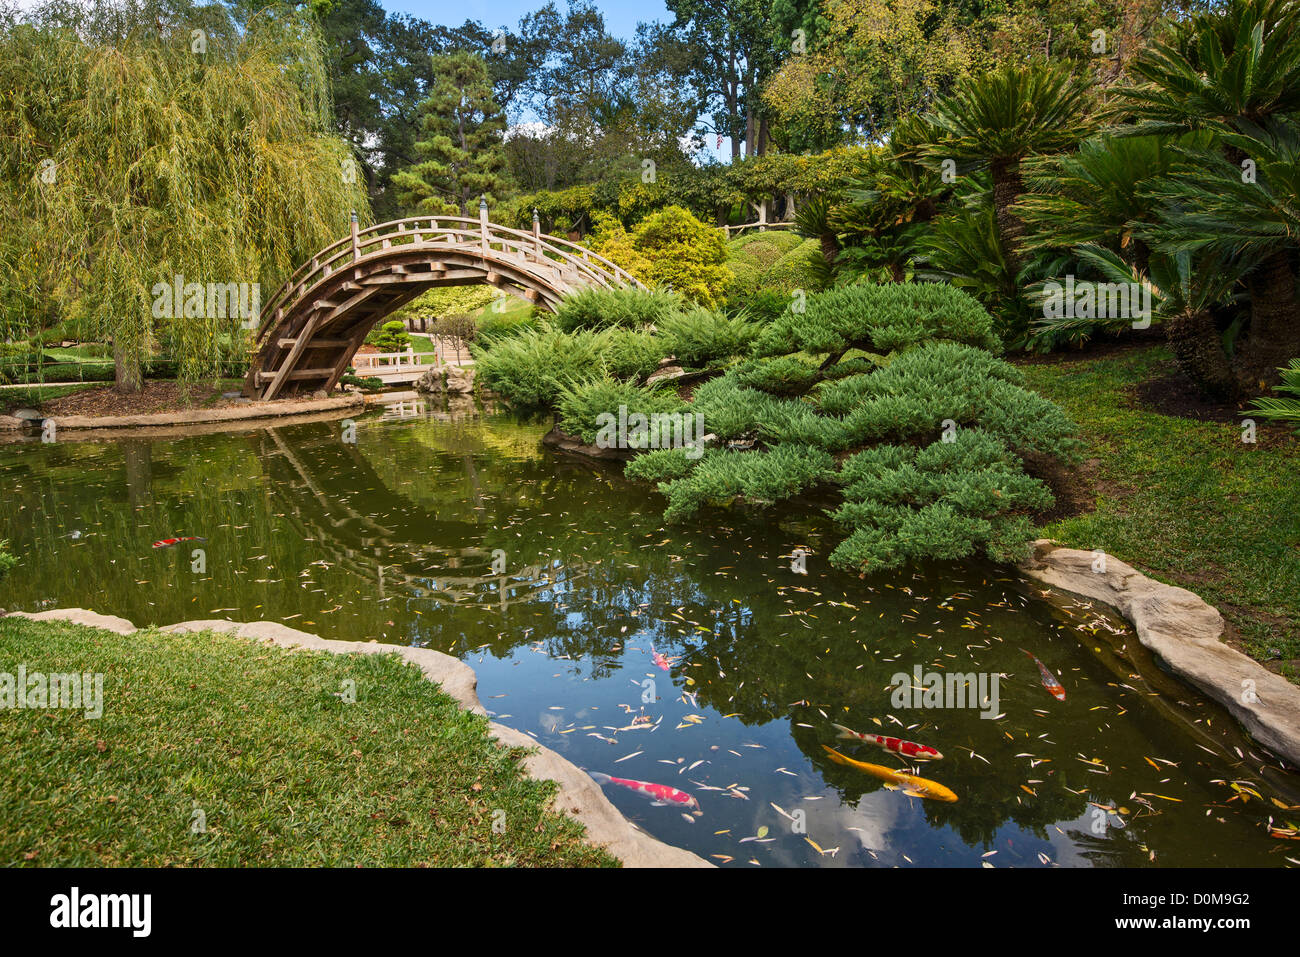 The Beautifully Renovated Japanese Gardens At The Huntington